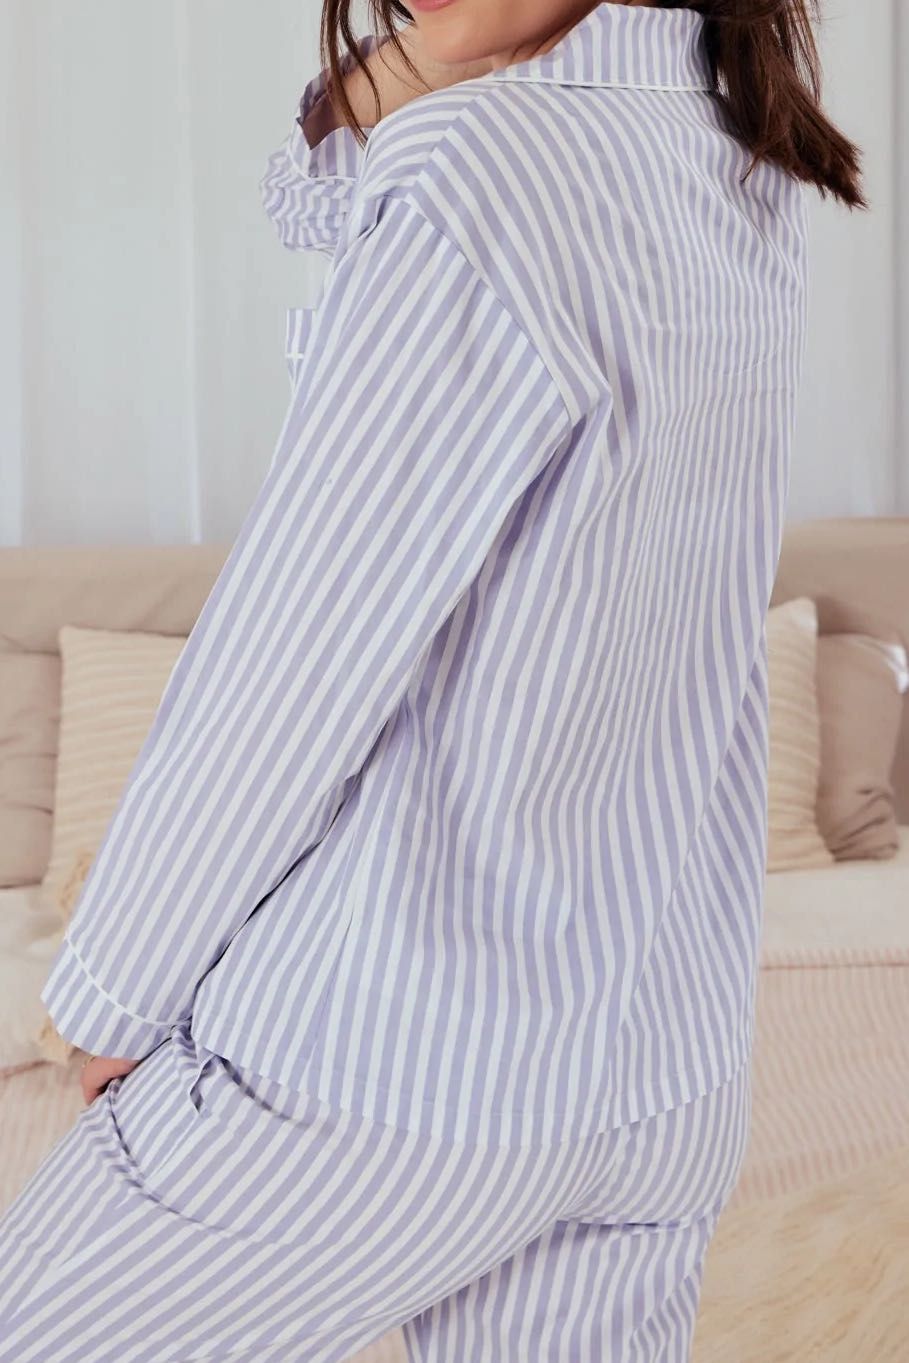 Primark Pyjamas Stripe Blue and White Size XS including long pants